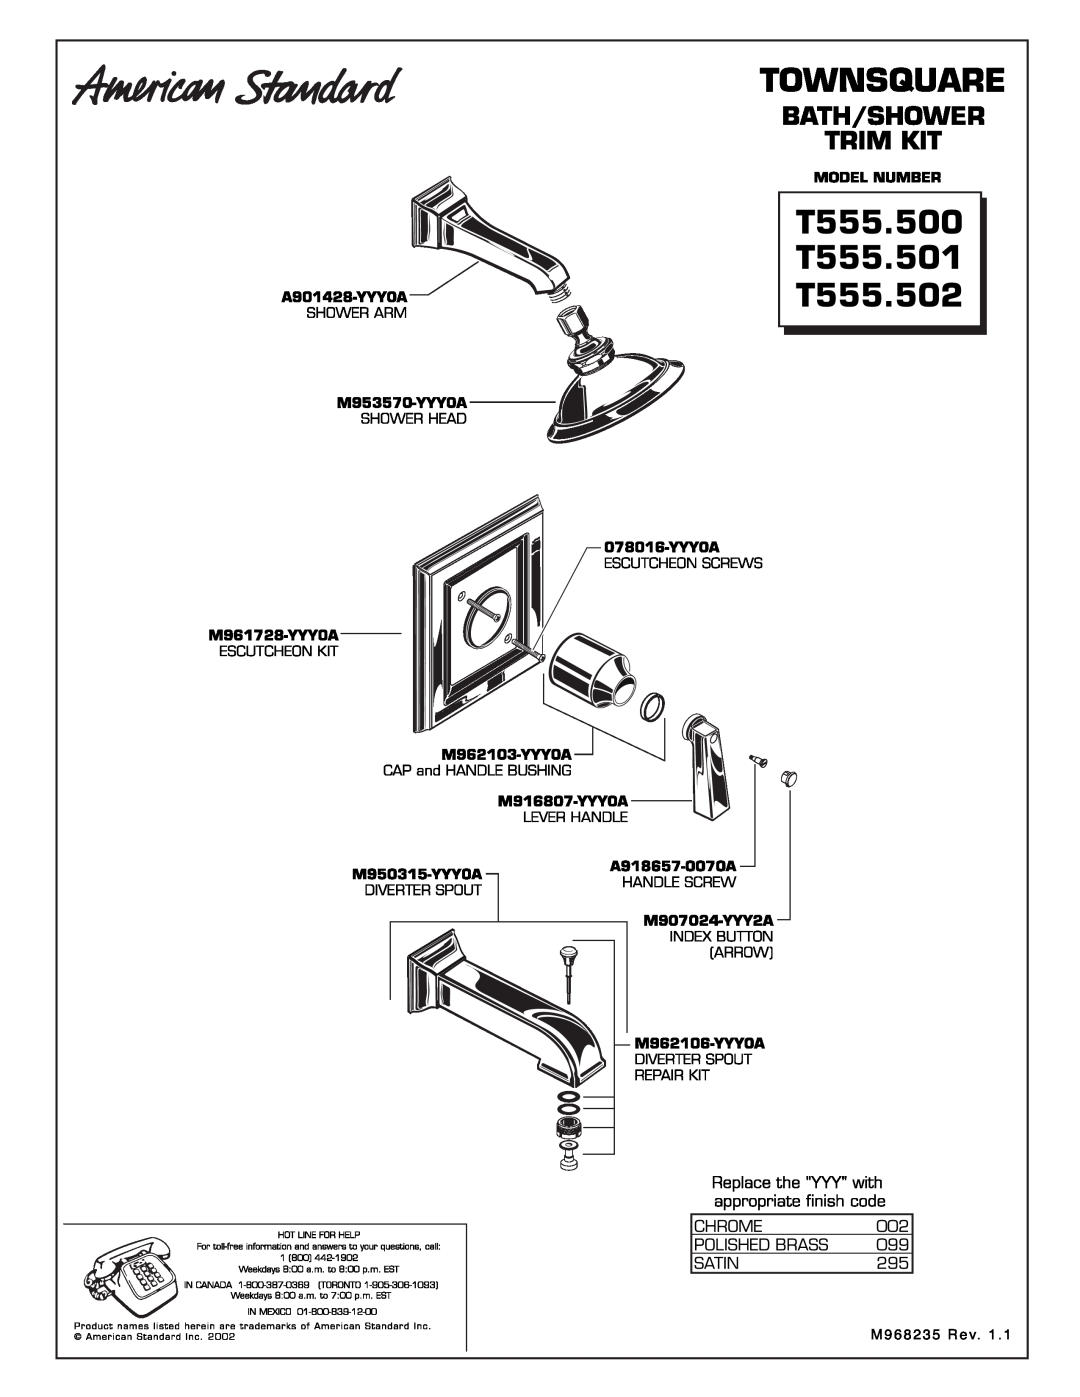 American Standard T555.501 installation instructions Installation, Instructions, Townsquare, T555.500, T555.502 